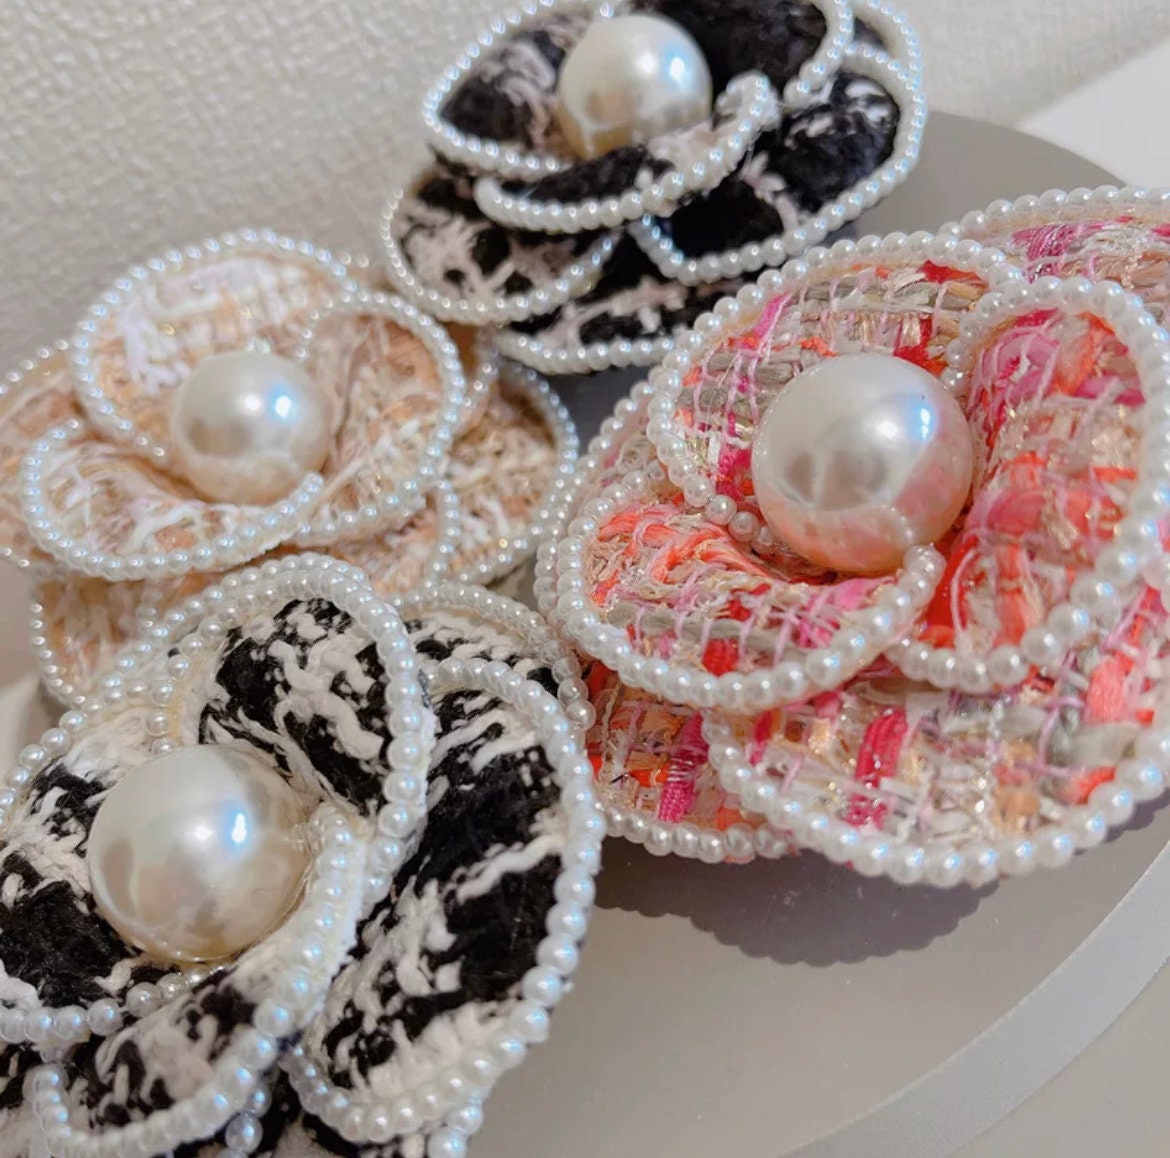 Luxury Camellia Fabric Flower Pearl Brooch – Seliste Jewellery